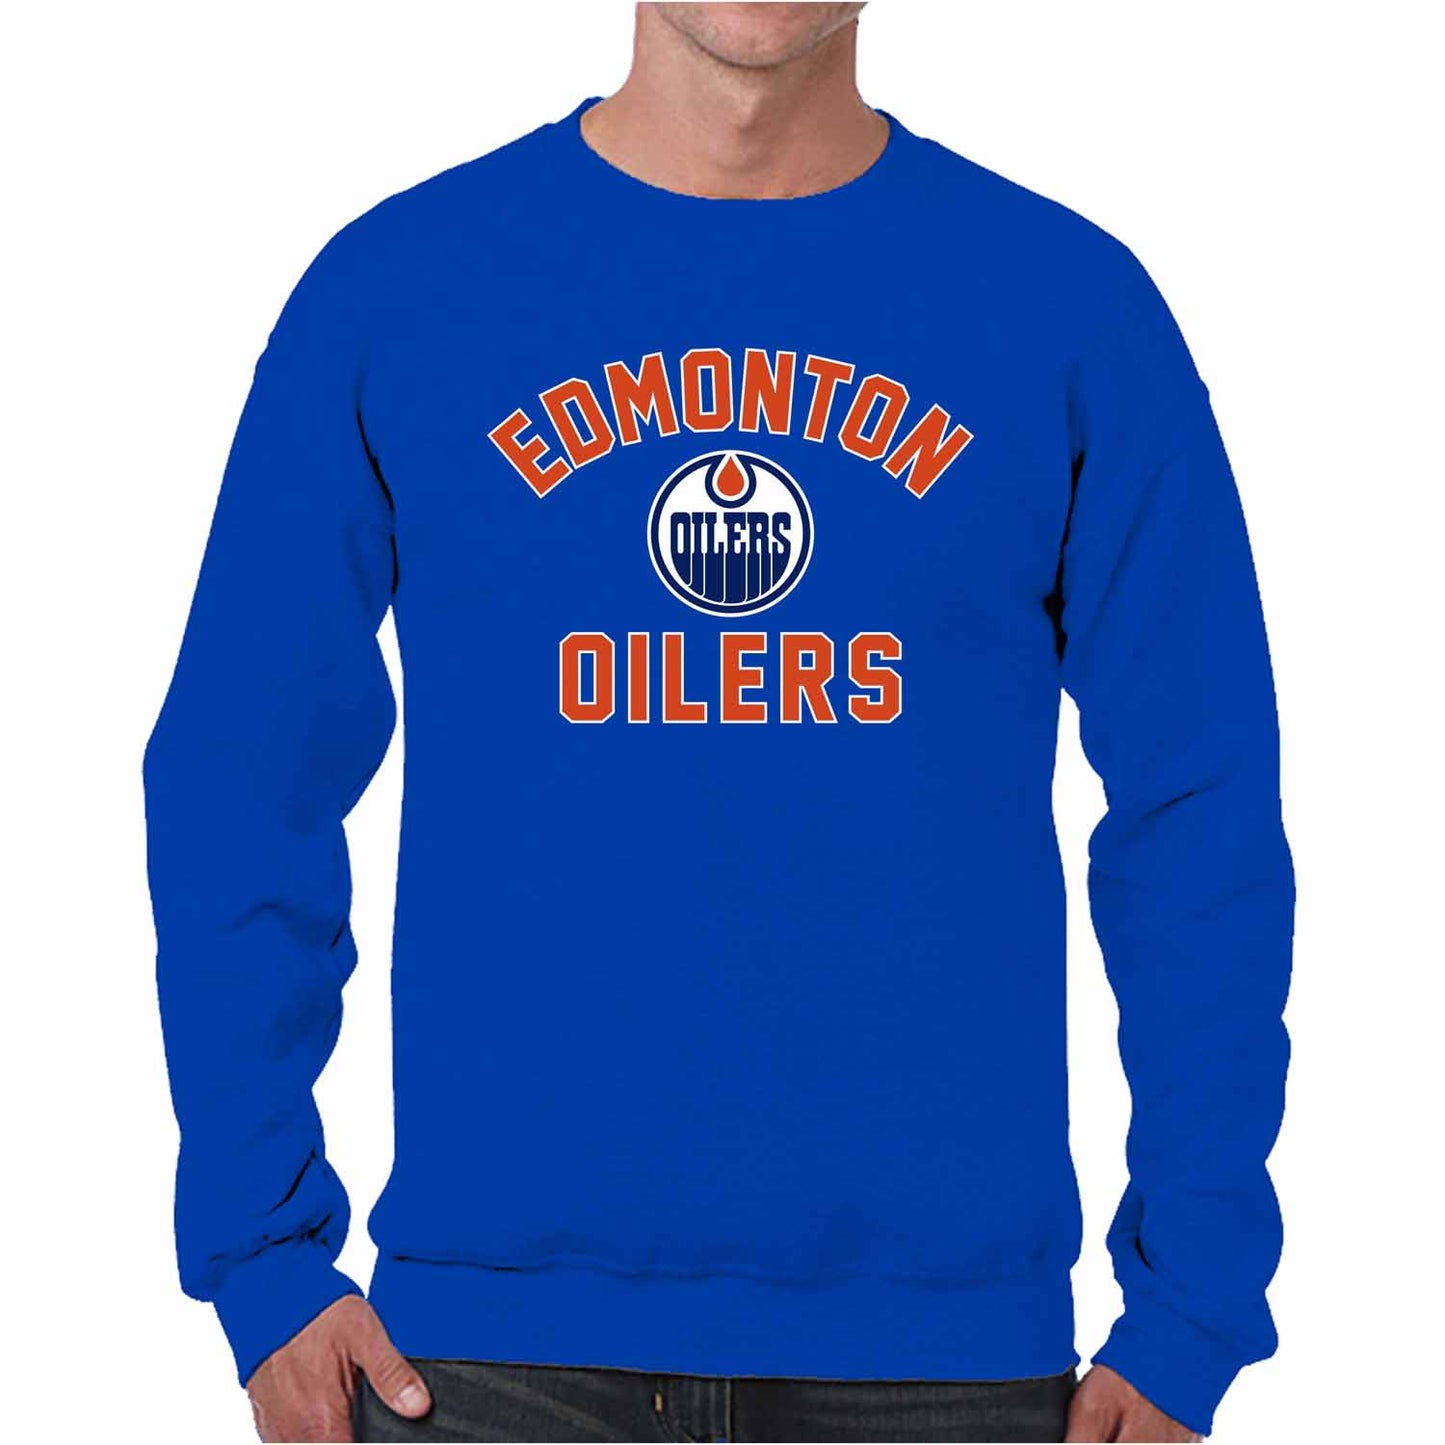 Edmonton Oilers Adult NHL Gameday Crewneck Sweatshirt - Royal